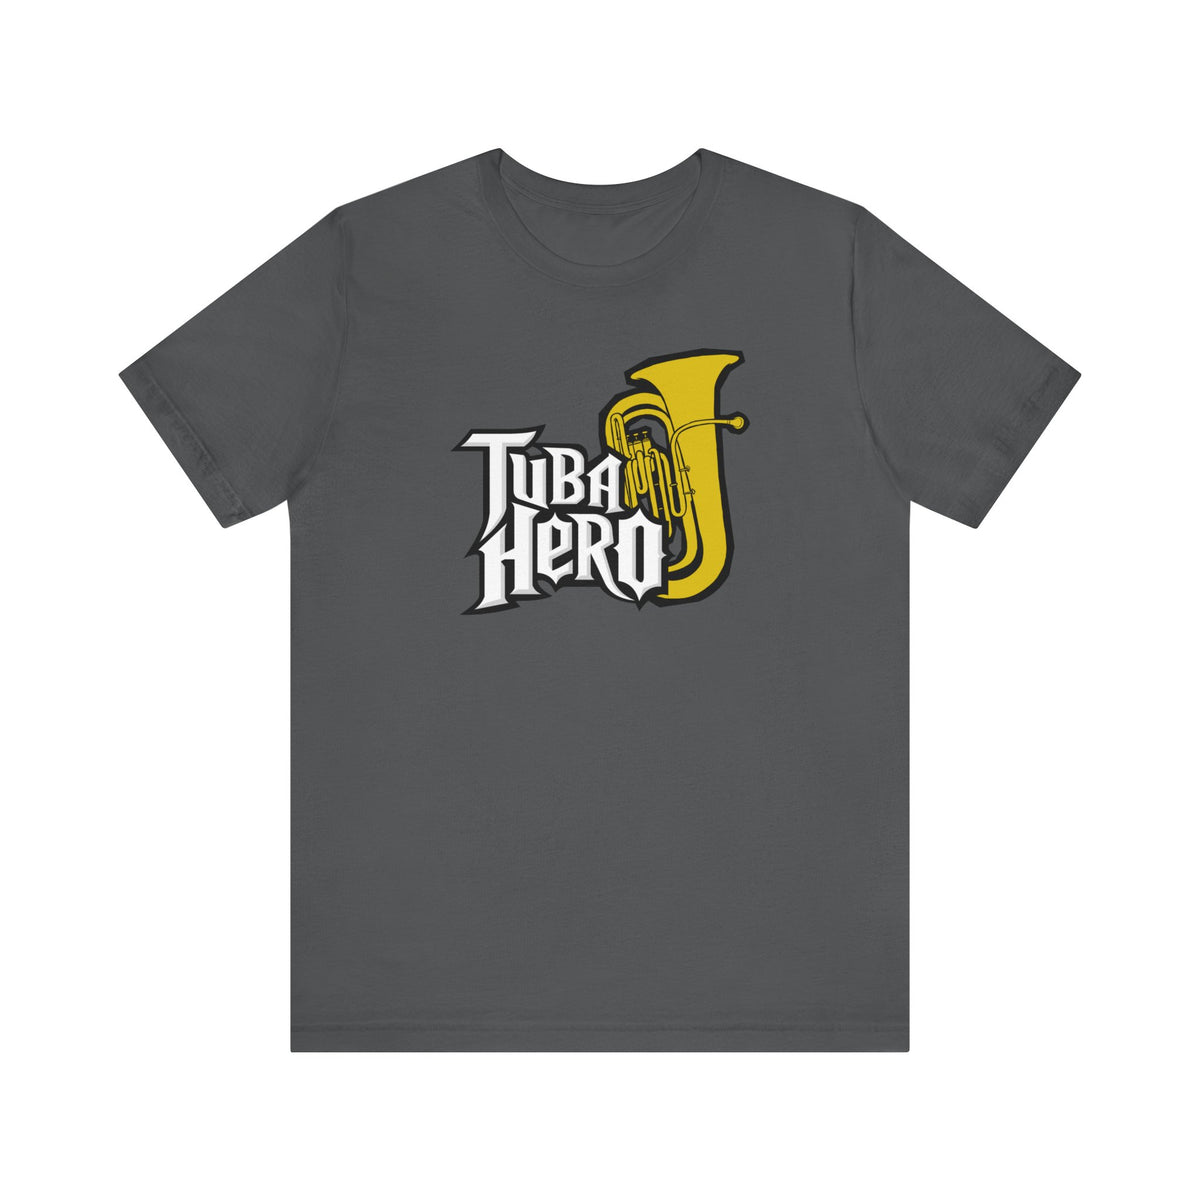 Tuba Hero - Men's T-Shirt